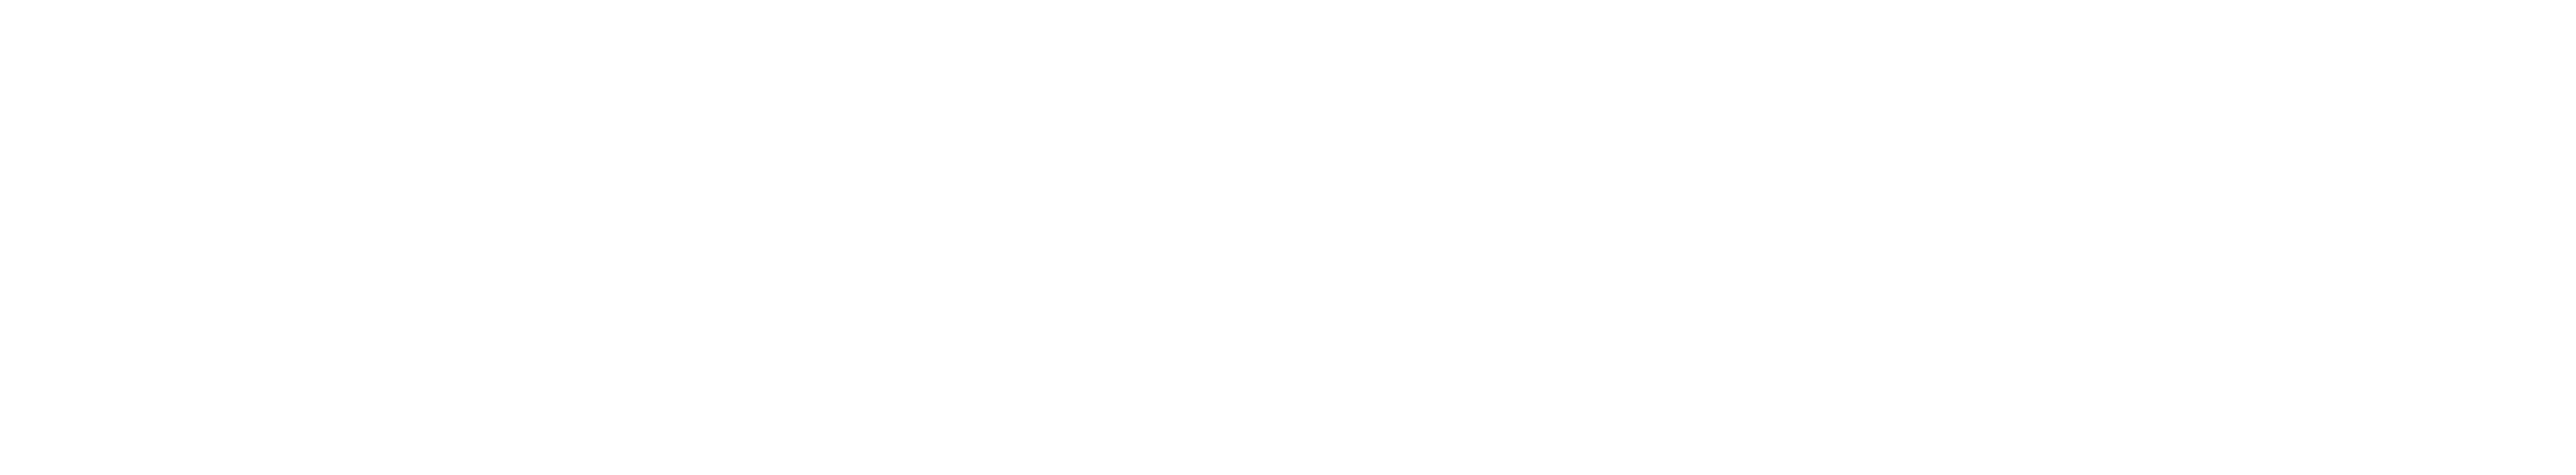 Southern Illinois University Edwardsville logo